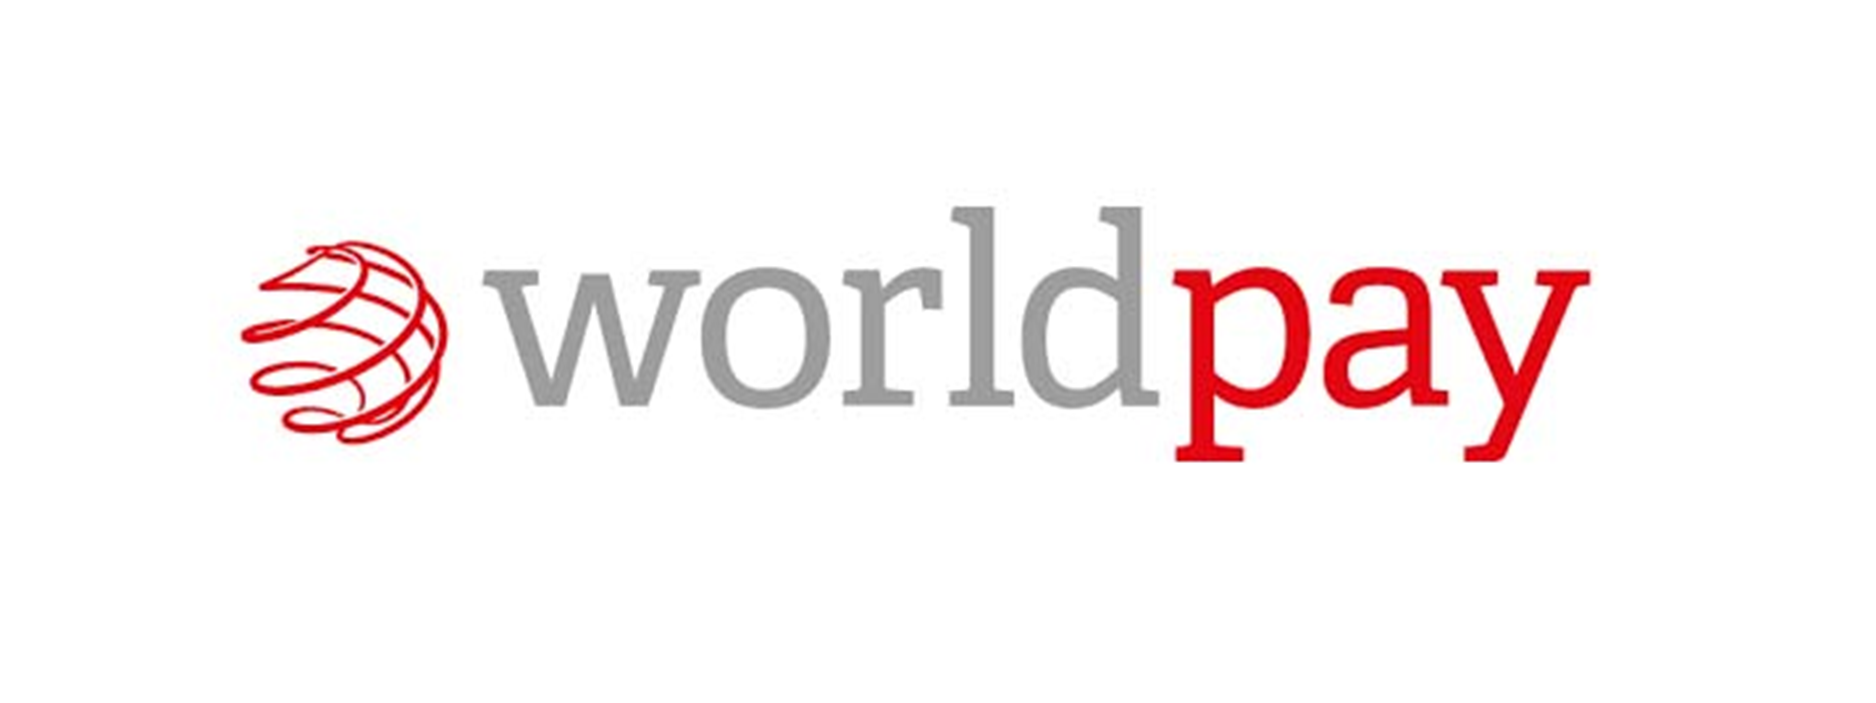 WorldPay's logo